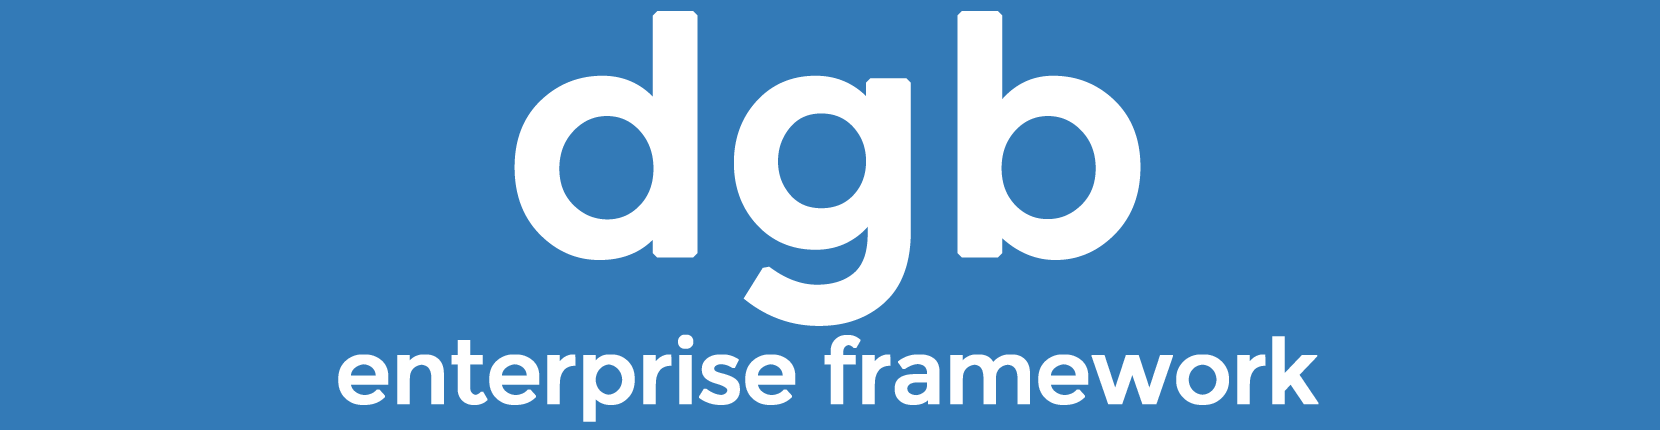 Dogobit Enterprise Framework logo